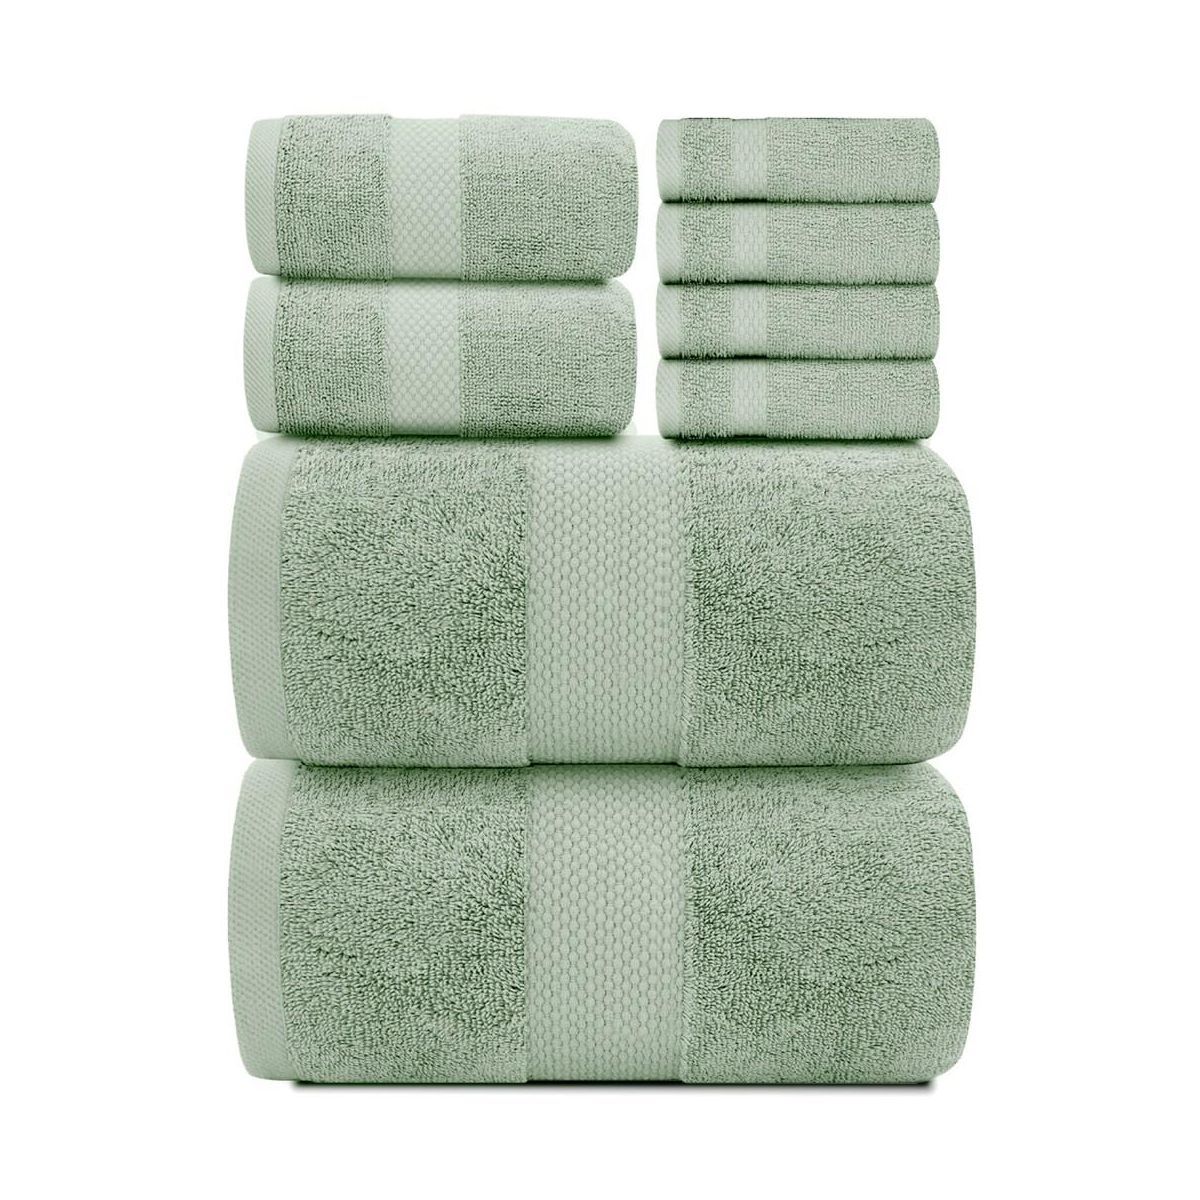 White Classic Luxury 100% Cotton 8 Piece Towel Set - 4x Washcloths, 2x Hand, and 2x Bath Towels | Target